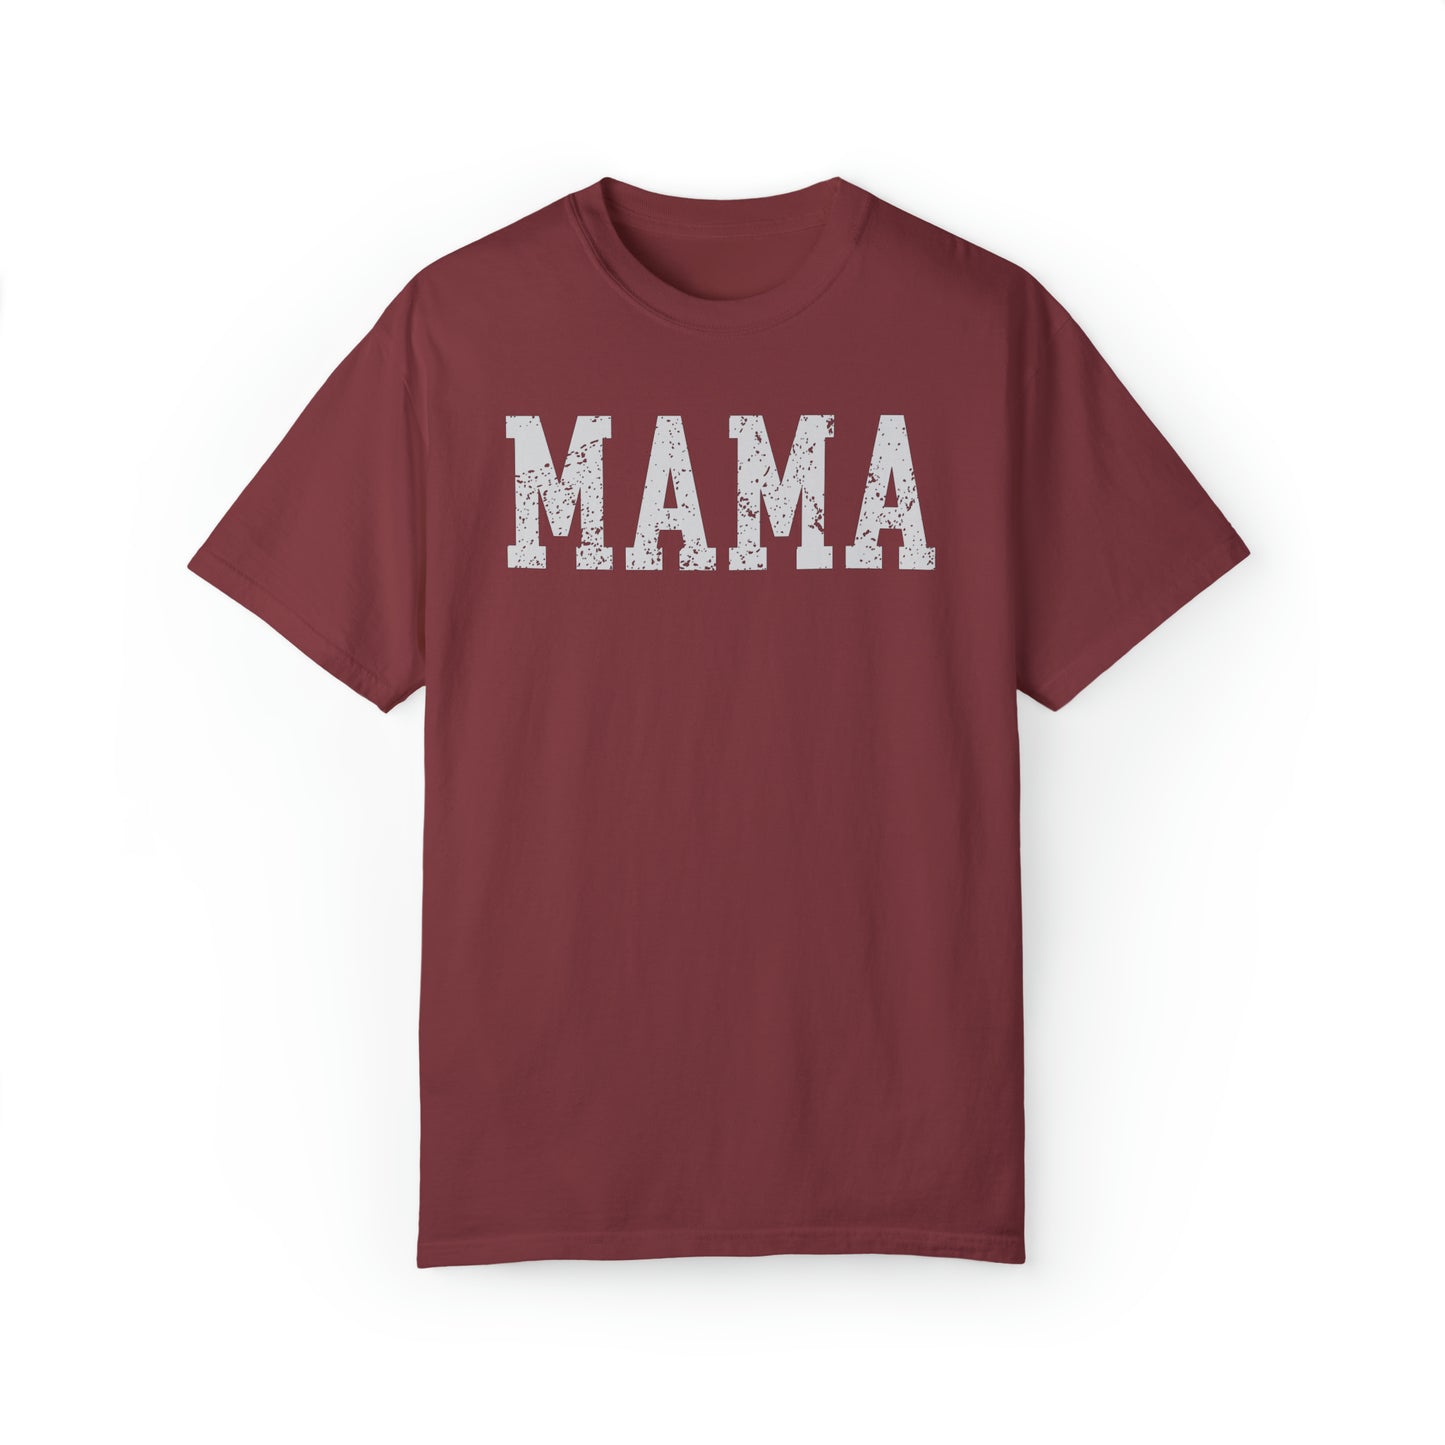 Mama Mom Mother Graphic T-Shirt, Comfort Colors Crewneck Shirt, Gift for Mom Grandma, New Mom Shirt, Baby Shower Gift